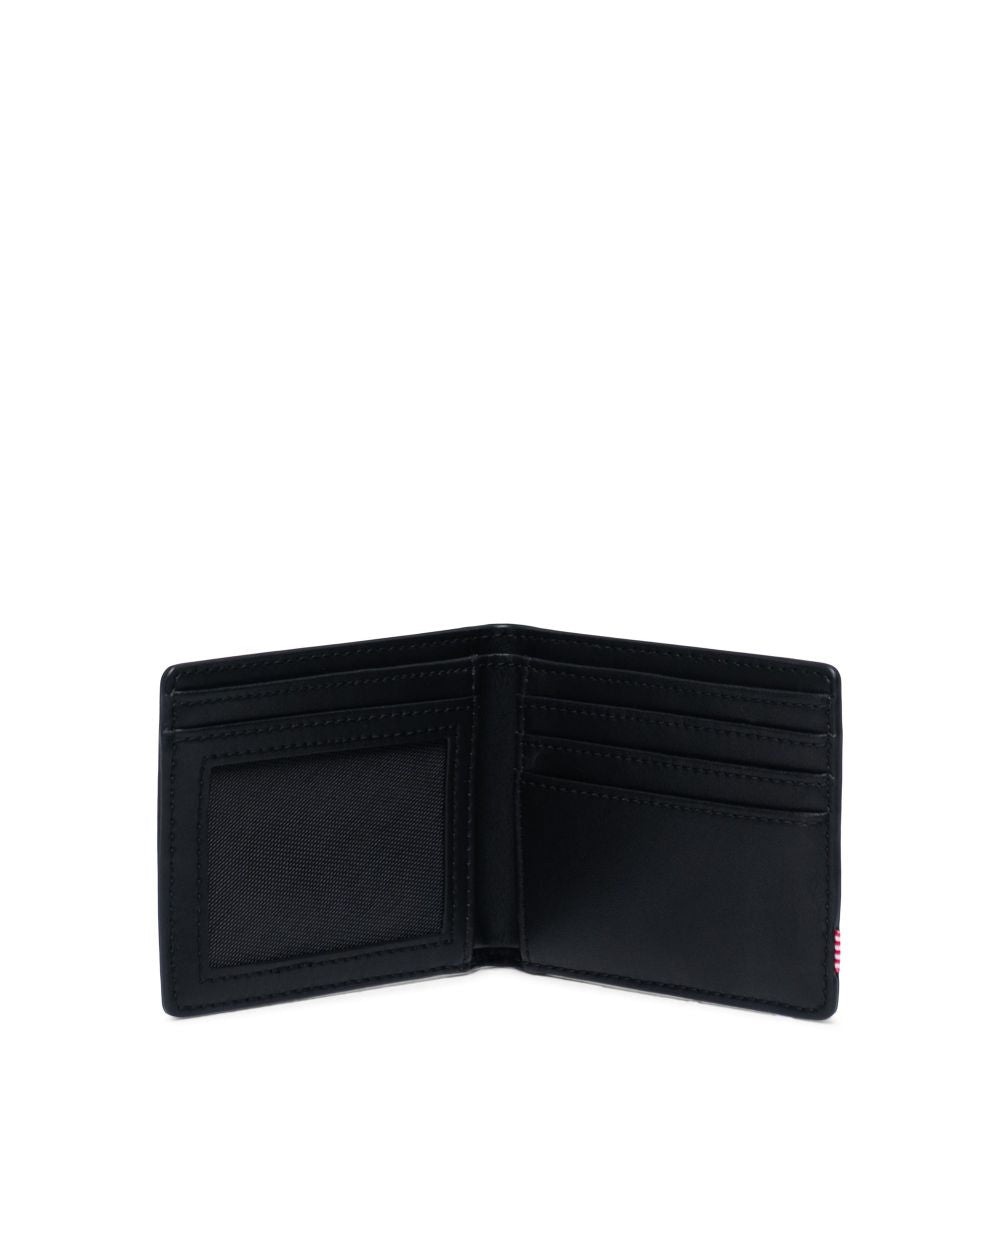 Herschel Hank Wallet In Black Genuine Leather